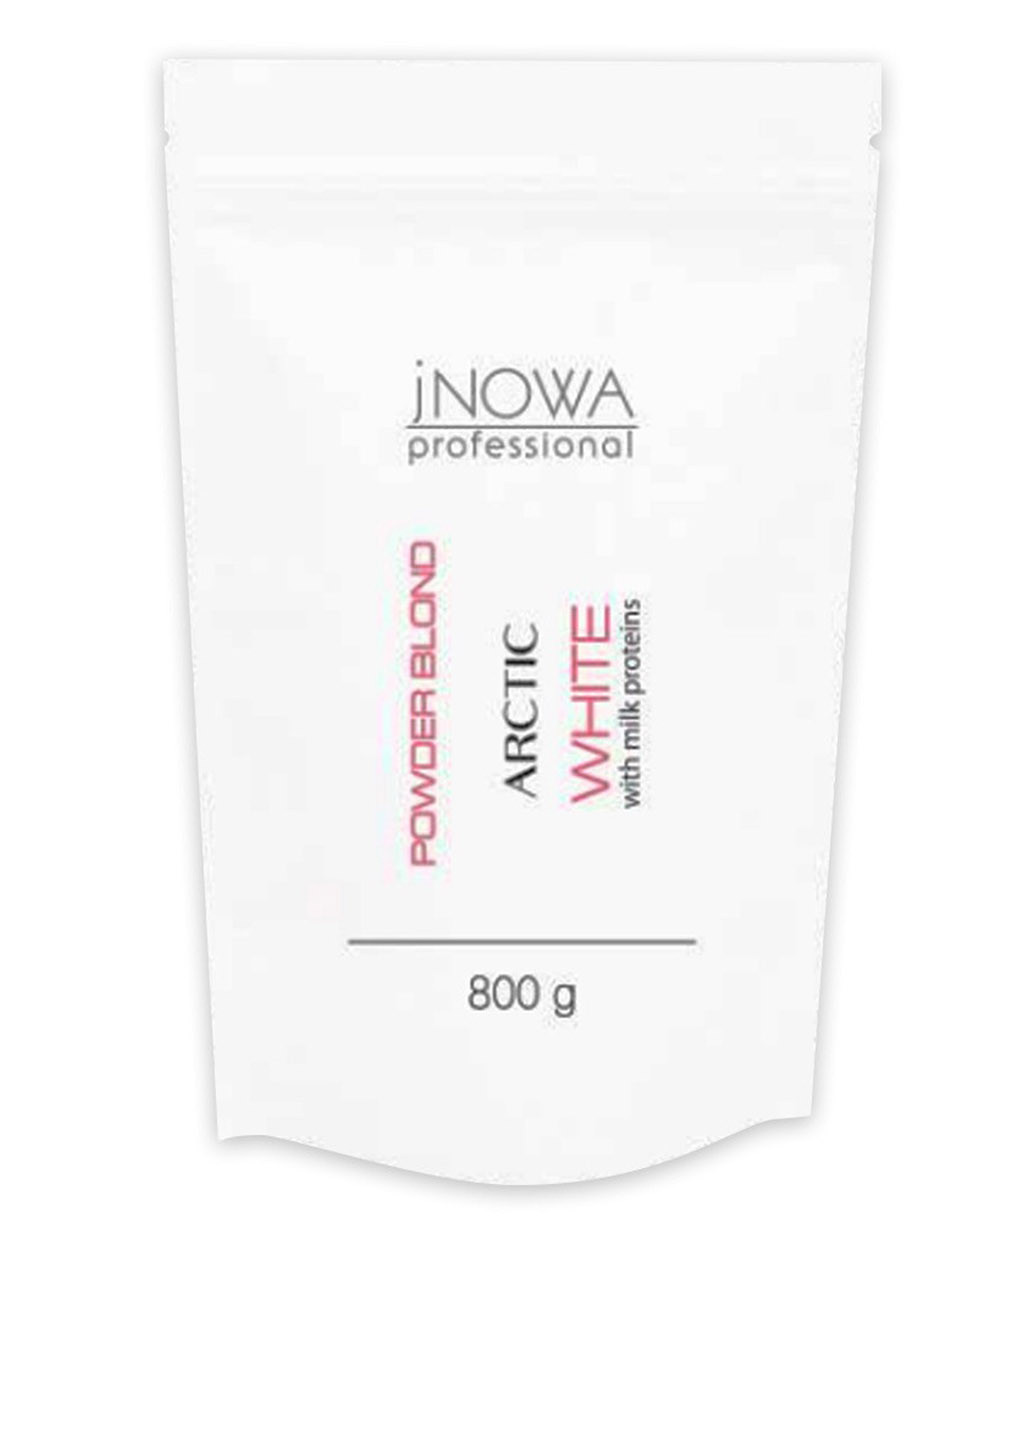 Пудра для волос осветляющая с протеинами молока Arctic, 800 г jNOWA Professional (75835233)